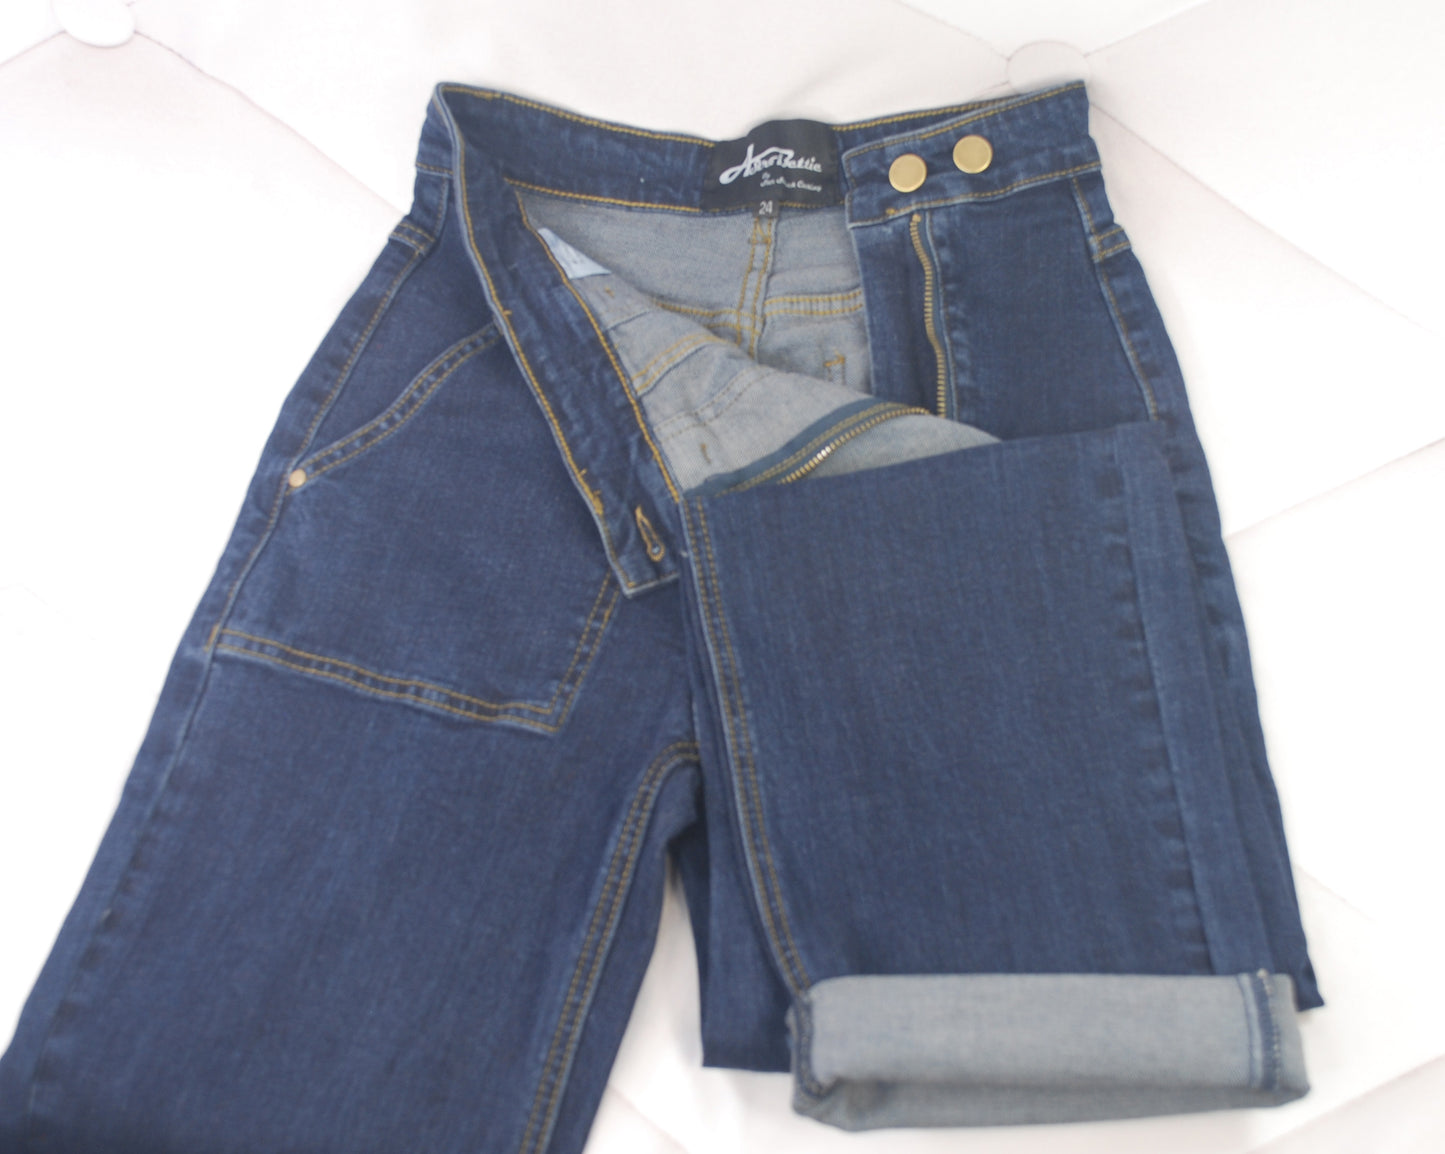 Classic Ava Reproduction Jeans - Indigo